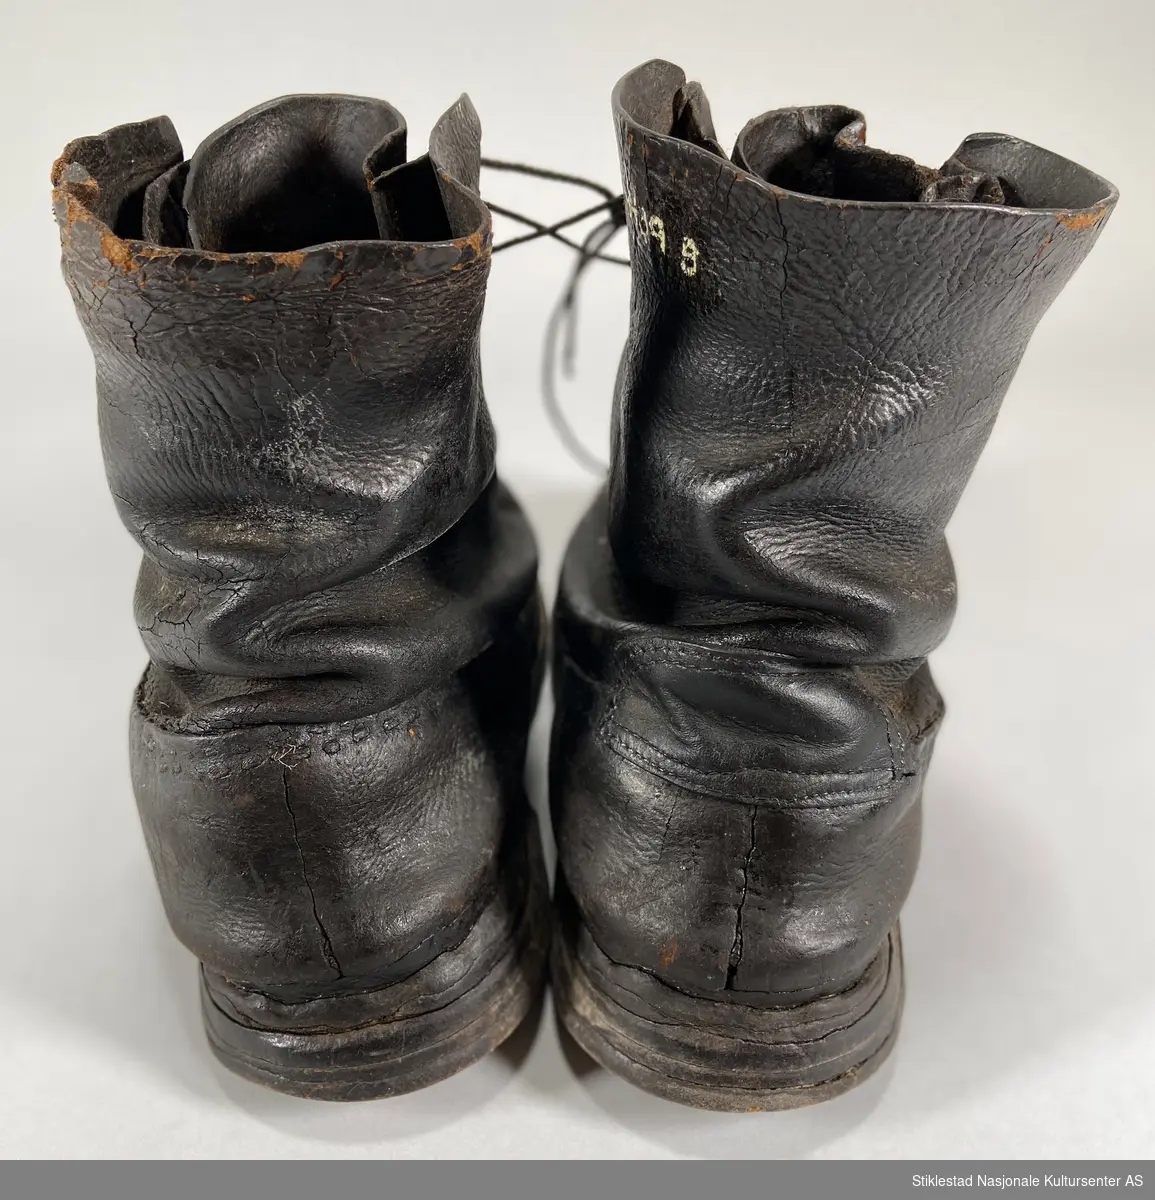 Et par lauparsko/skinnsko med nyere snøring. Skaftet har maljer i metall. Påsatt ekstra lærsåle på hælen. Skobespar på begge hæler. Underlær er sydd sammen med overlæret. Uforet sko.